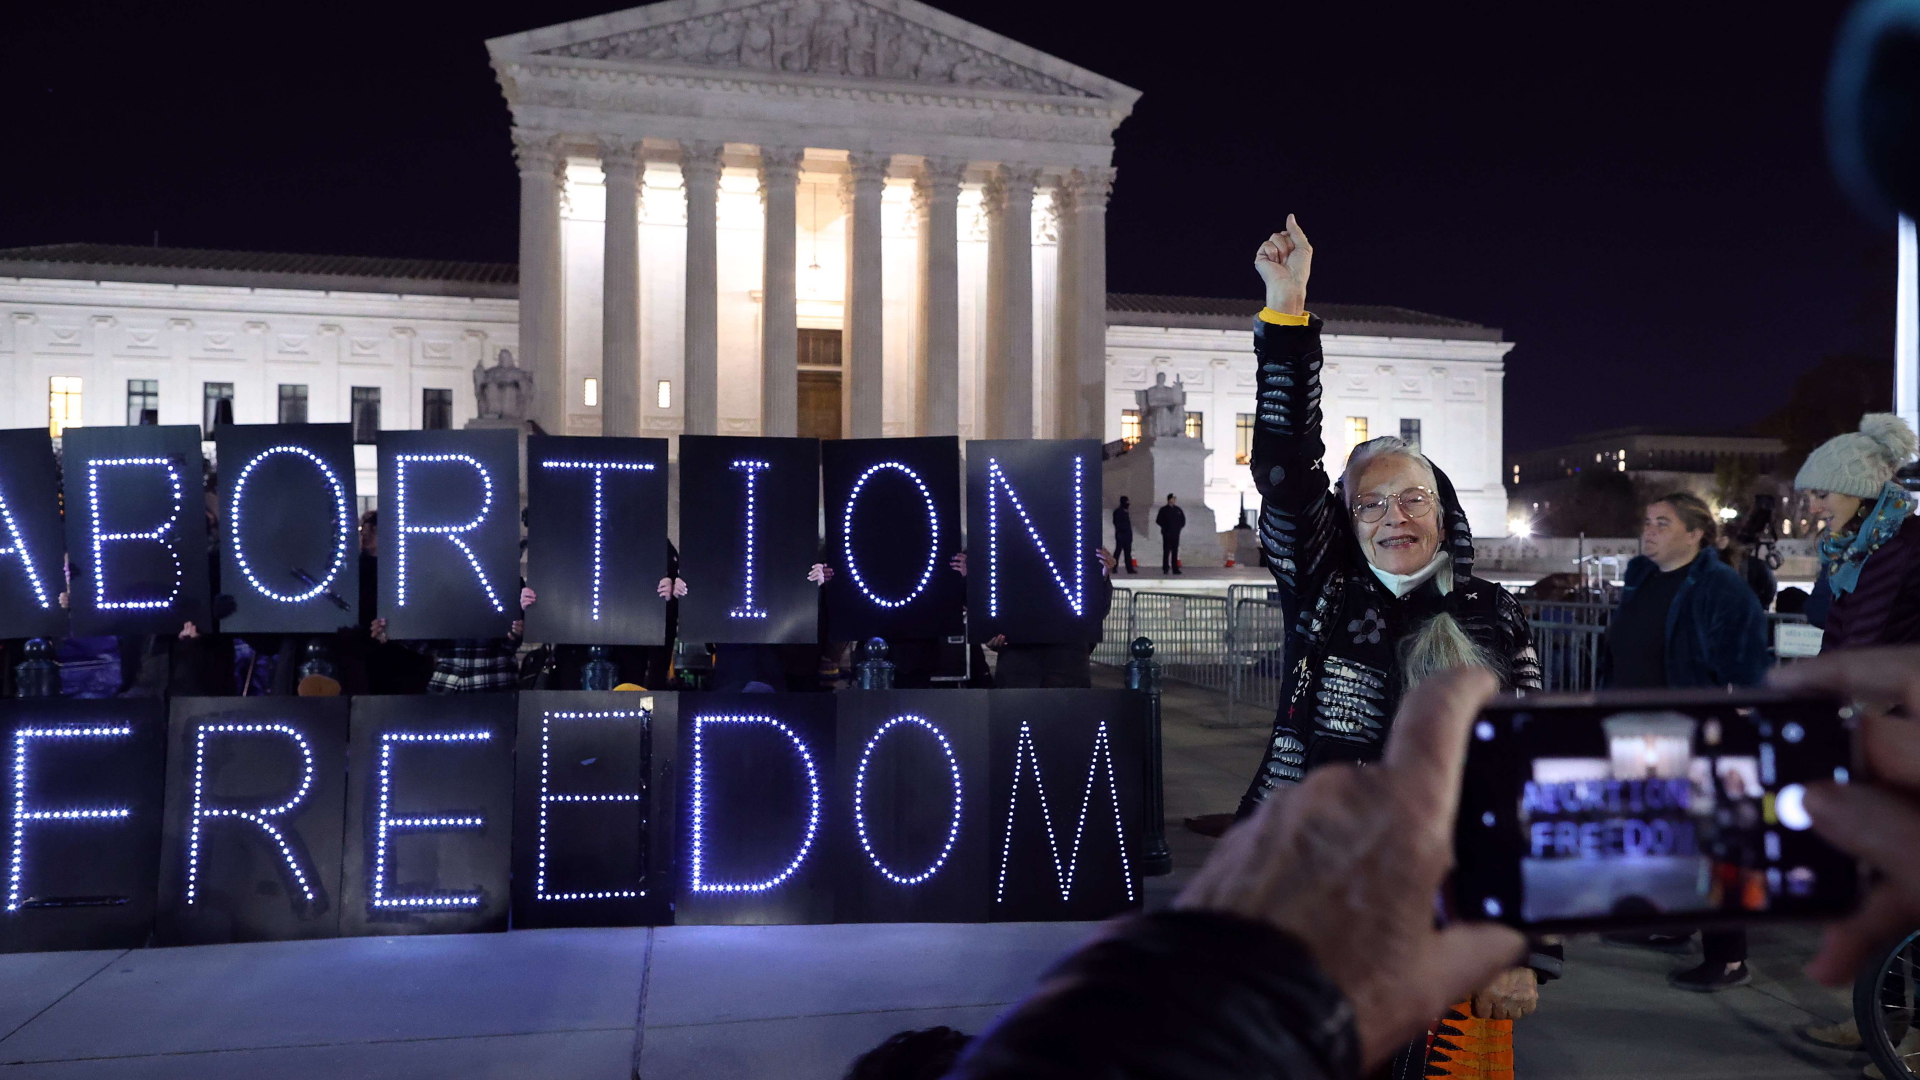 US-Supreme Court: Liberales Abtreibungsrecht vor dem Aus?